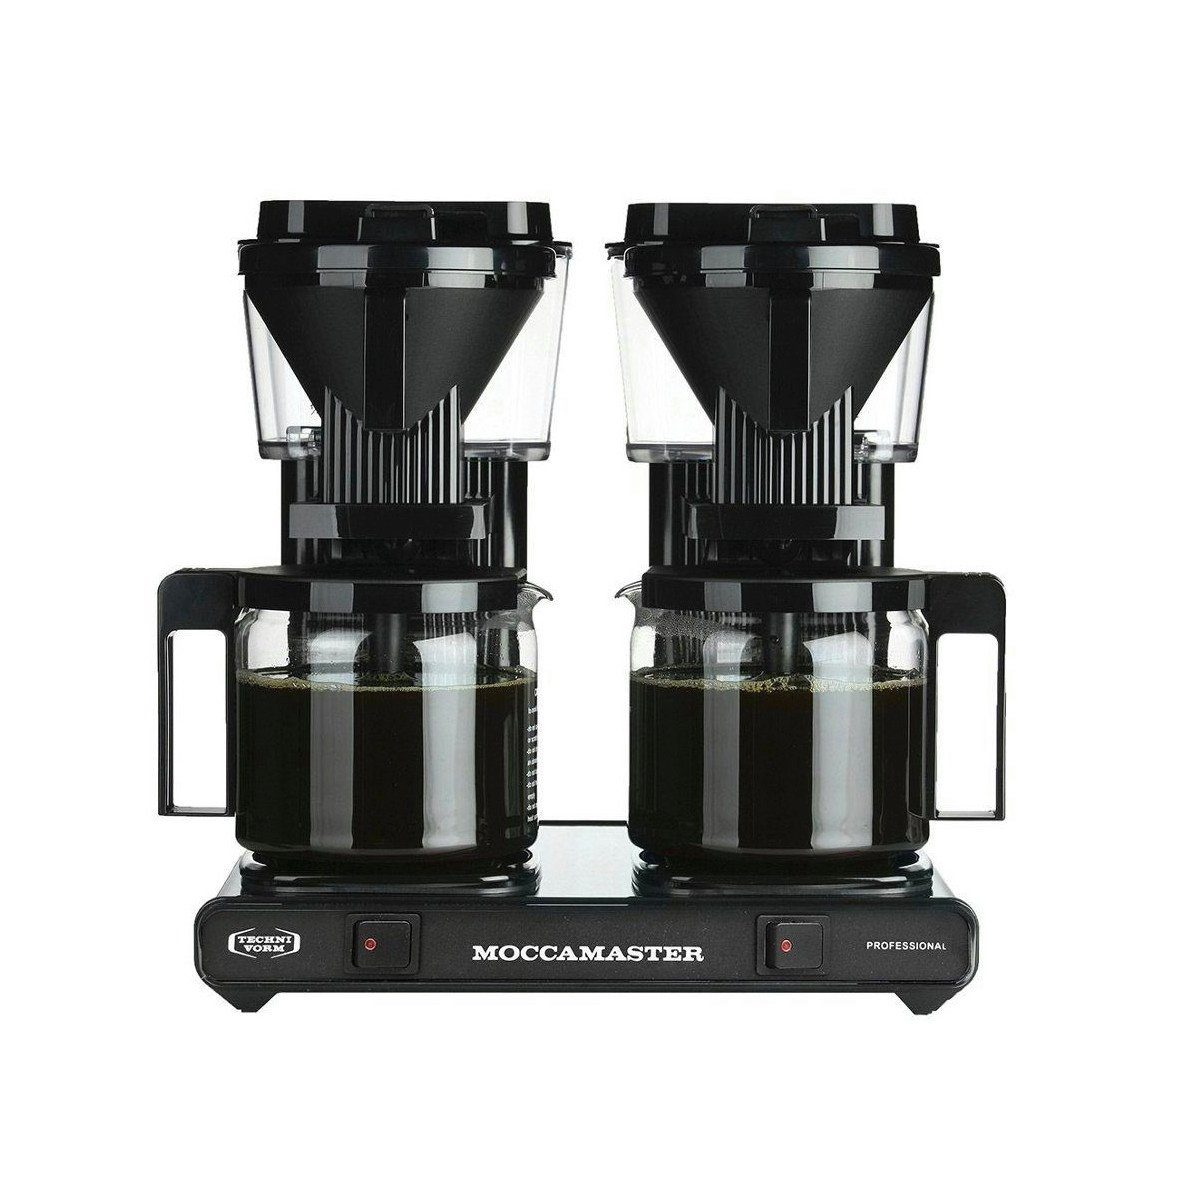 Moccamaster Filterkaffeemaschine KBG 744 Professional, 2x1,25 l